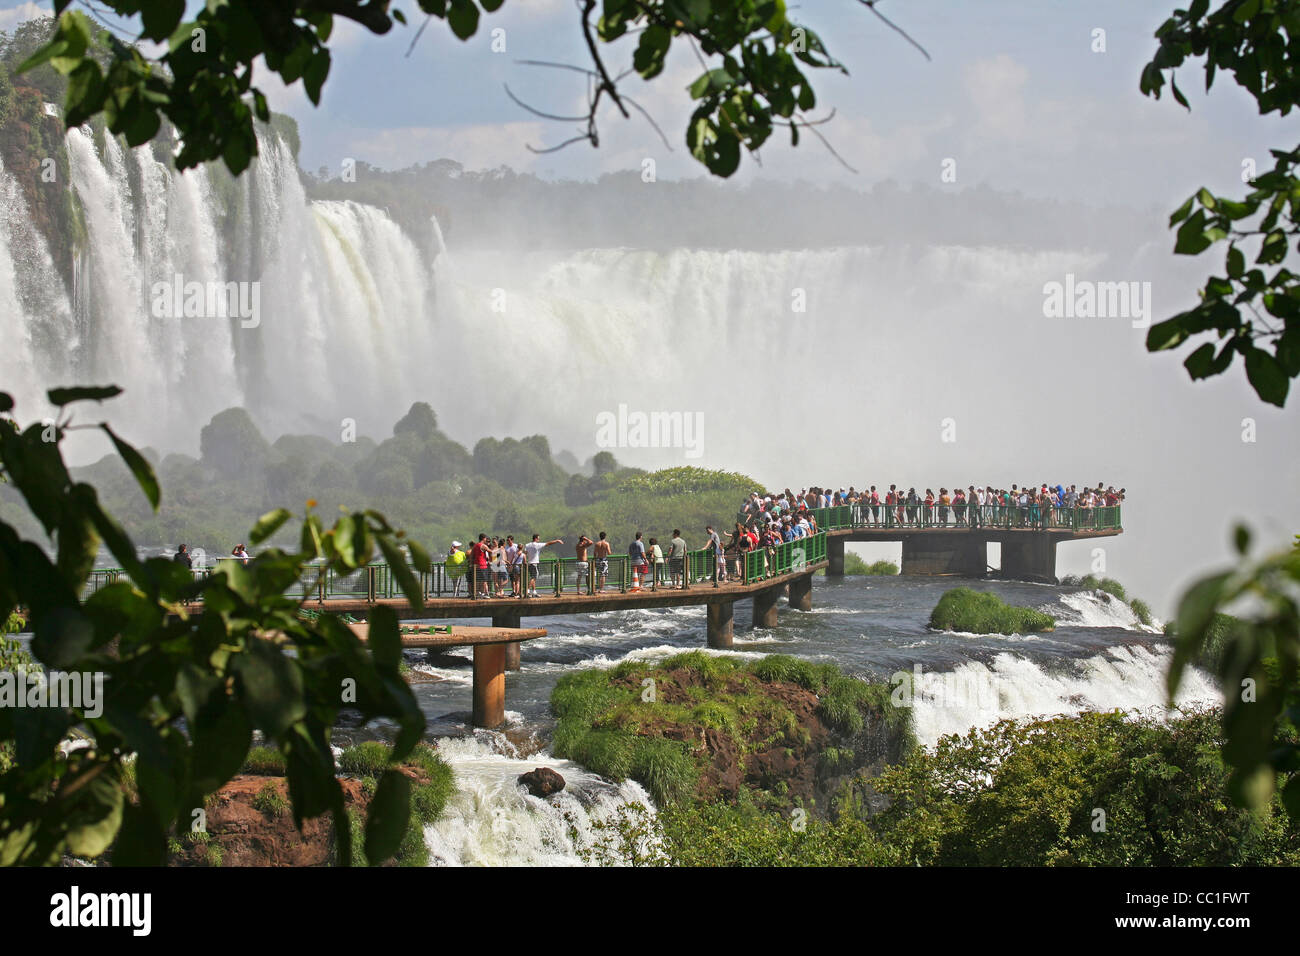 Tourists on walkway at the Iguazu Falls / Iguassu Falls / Iguaçu Falls on the border of Brazil and Argentina Stock Photo